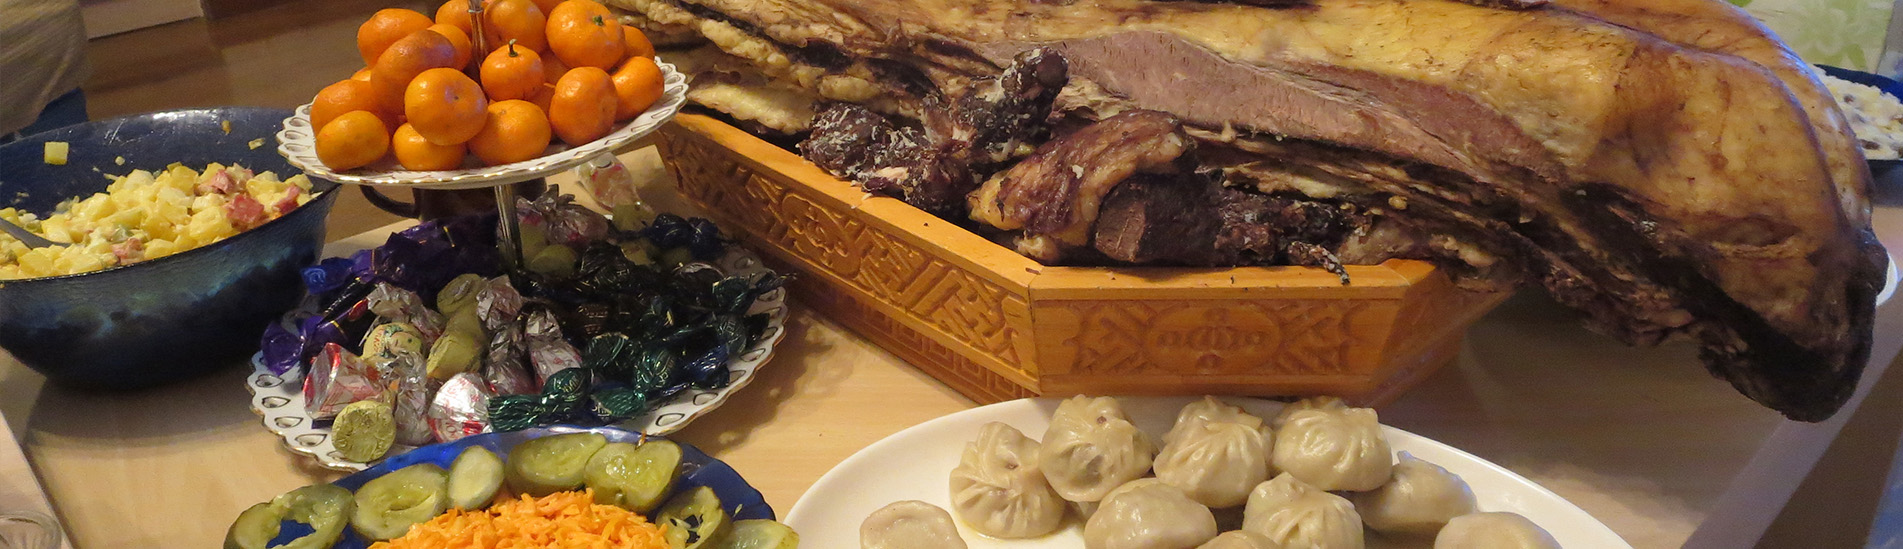 authentic mongolian food